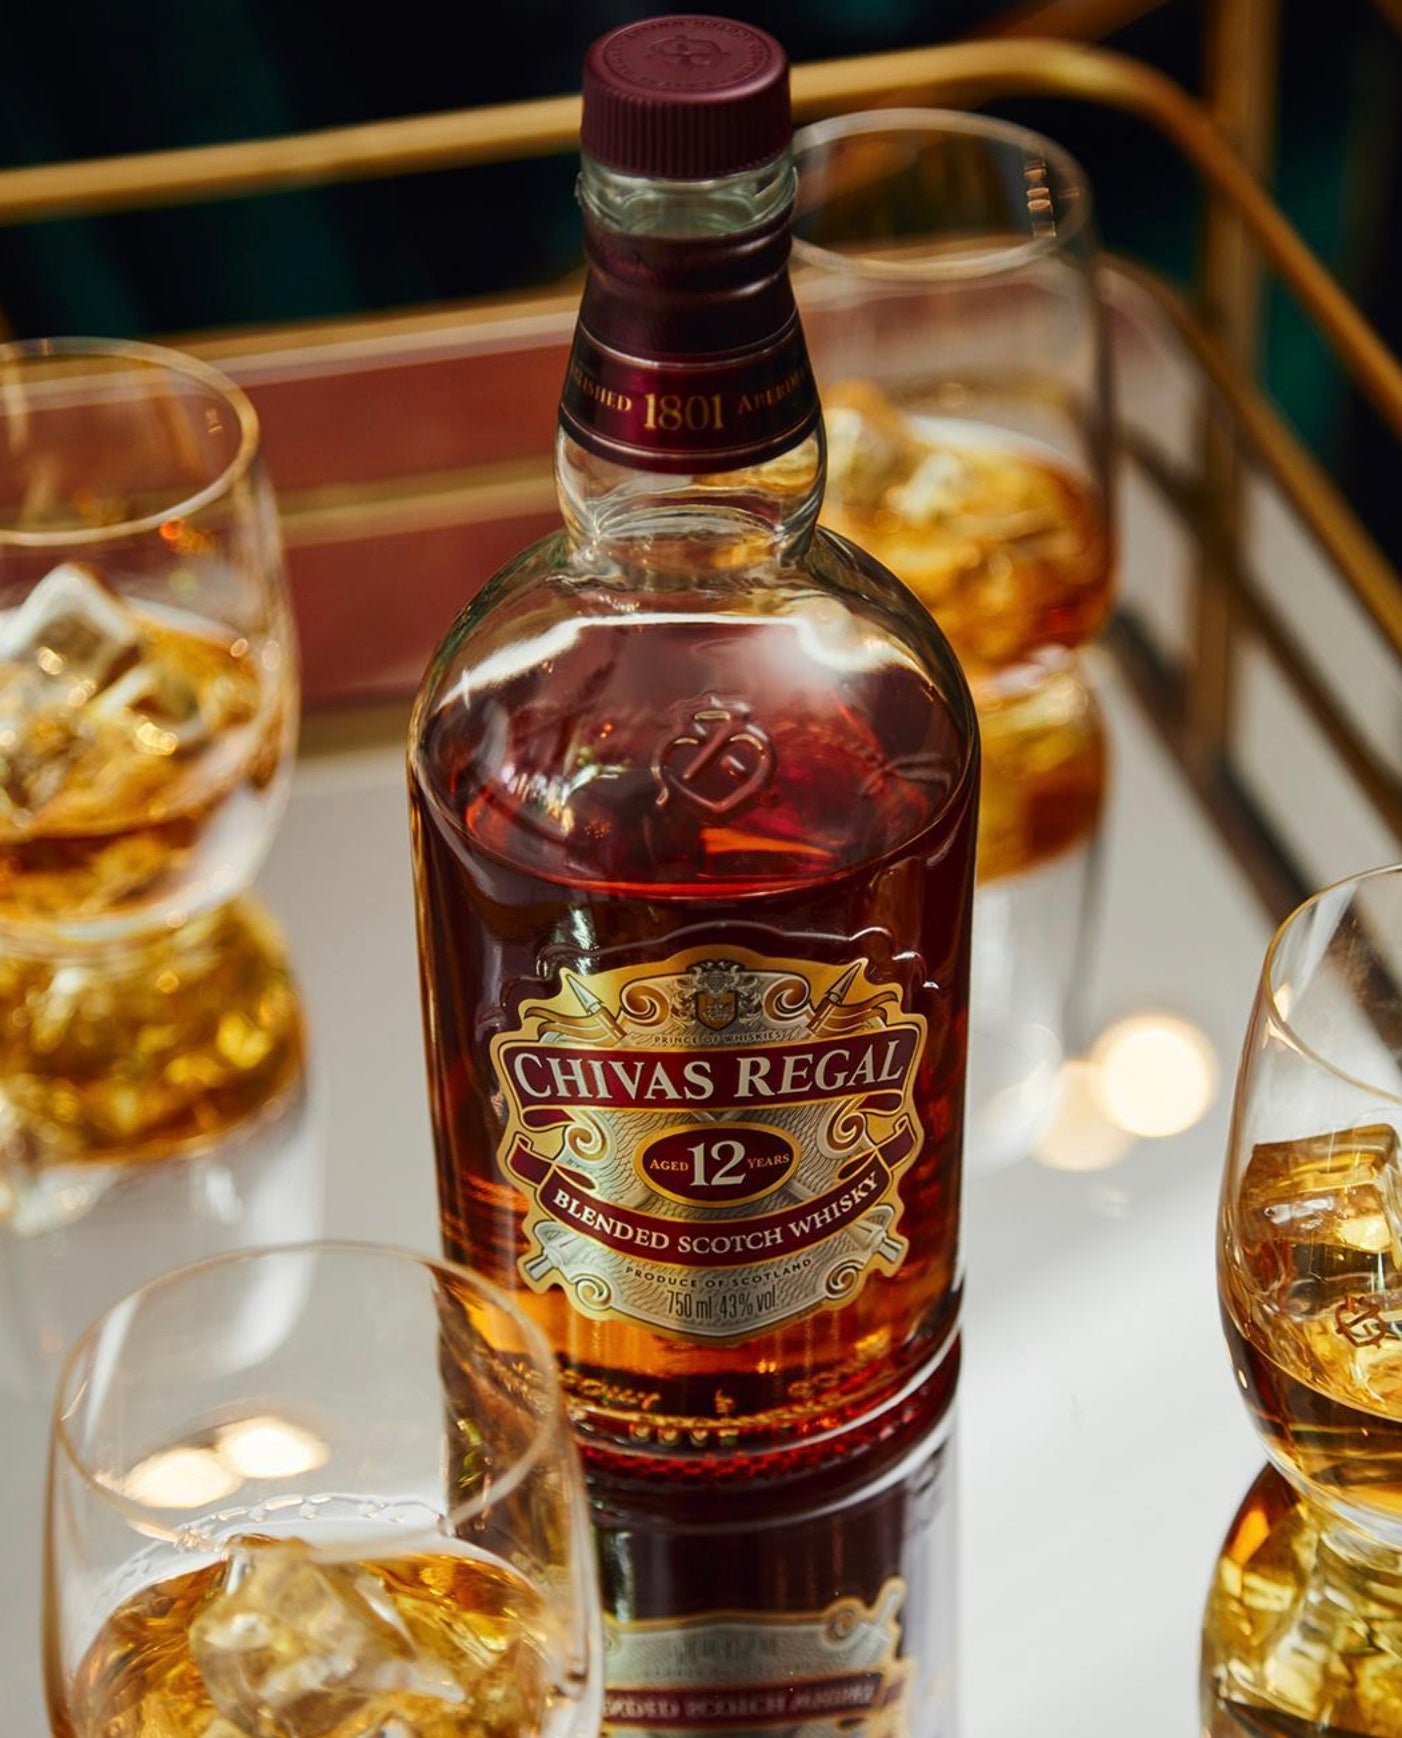 Chivas Regal 18yr Scotch Whisky Gold Signature 750mL – Wine & Liquor Mart